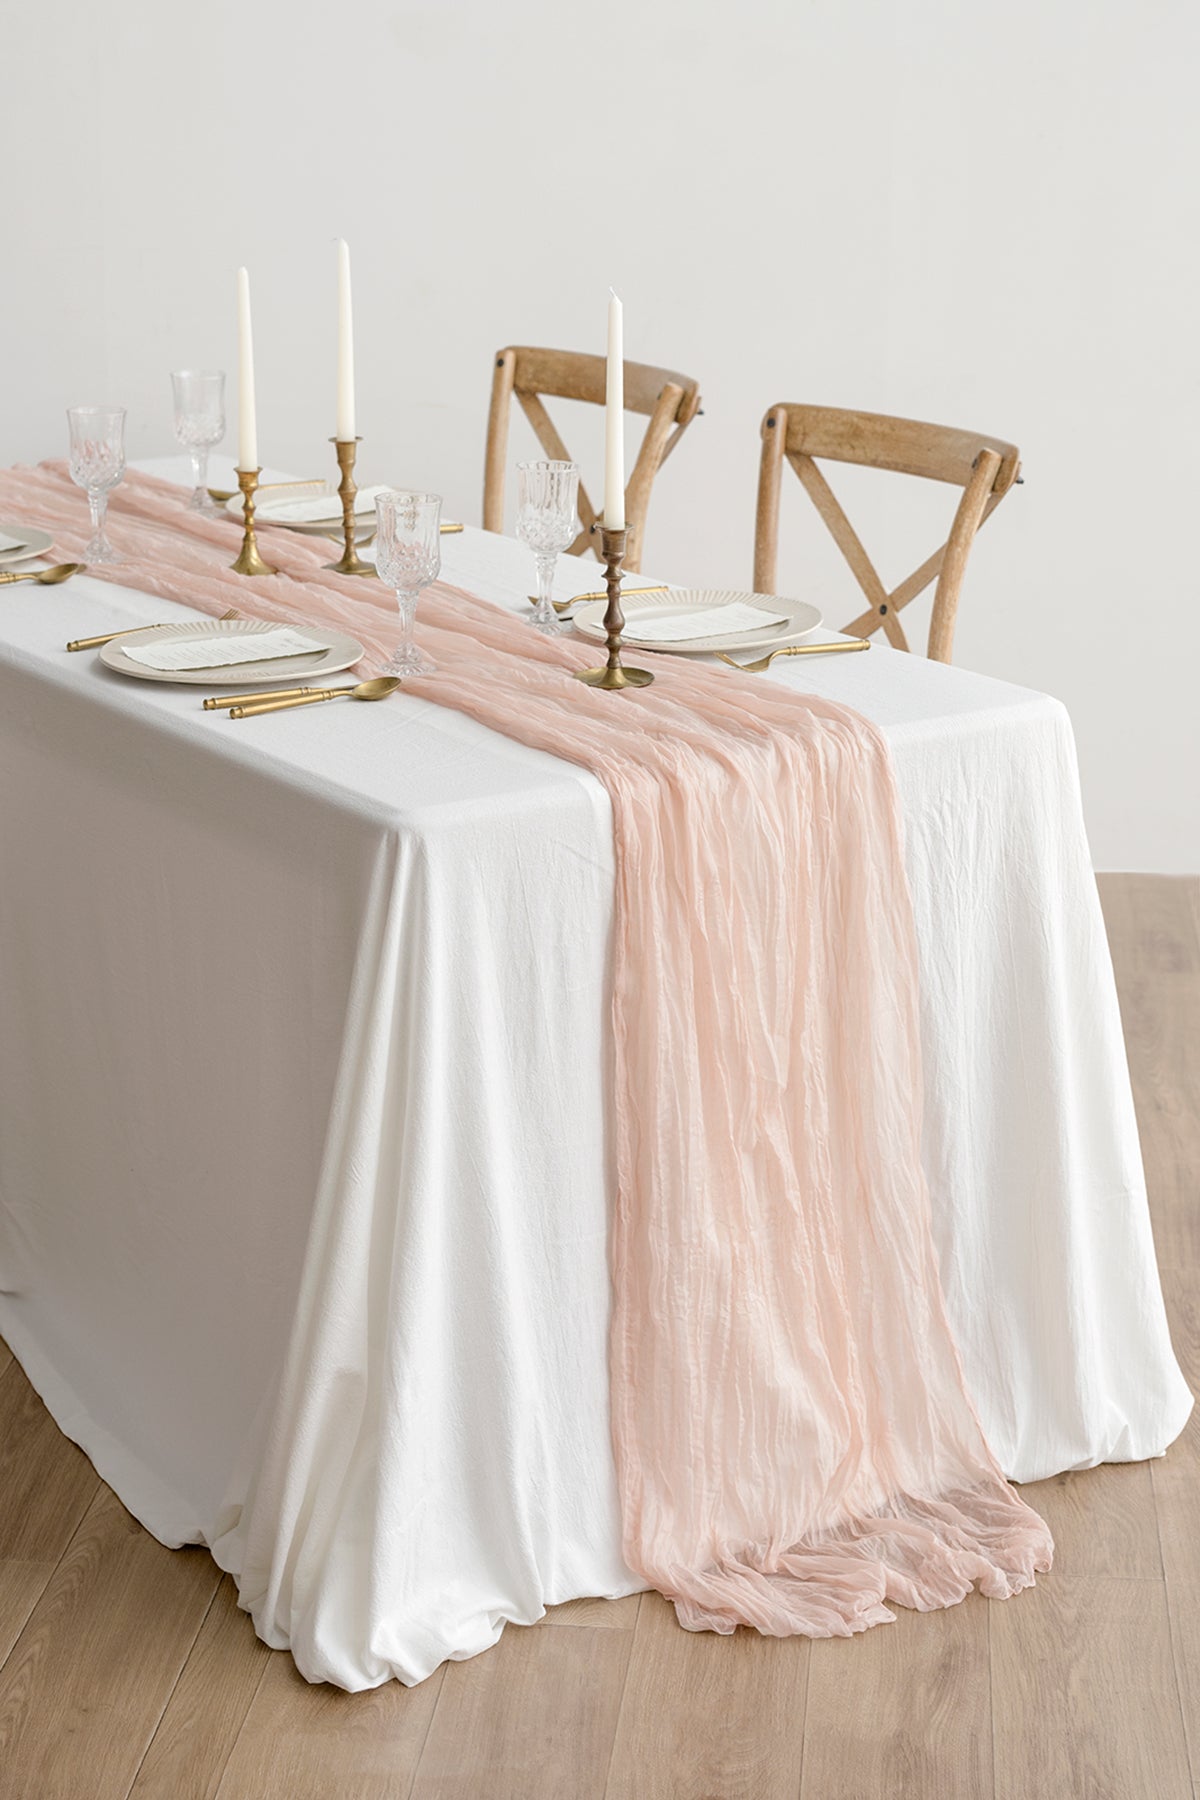 Table Linens in Lavender Aster & Burnt Orange